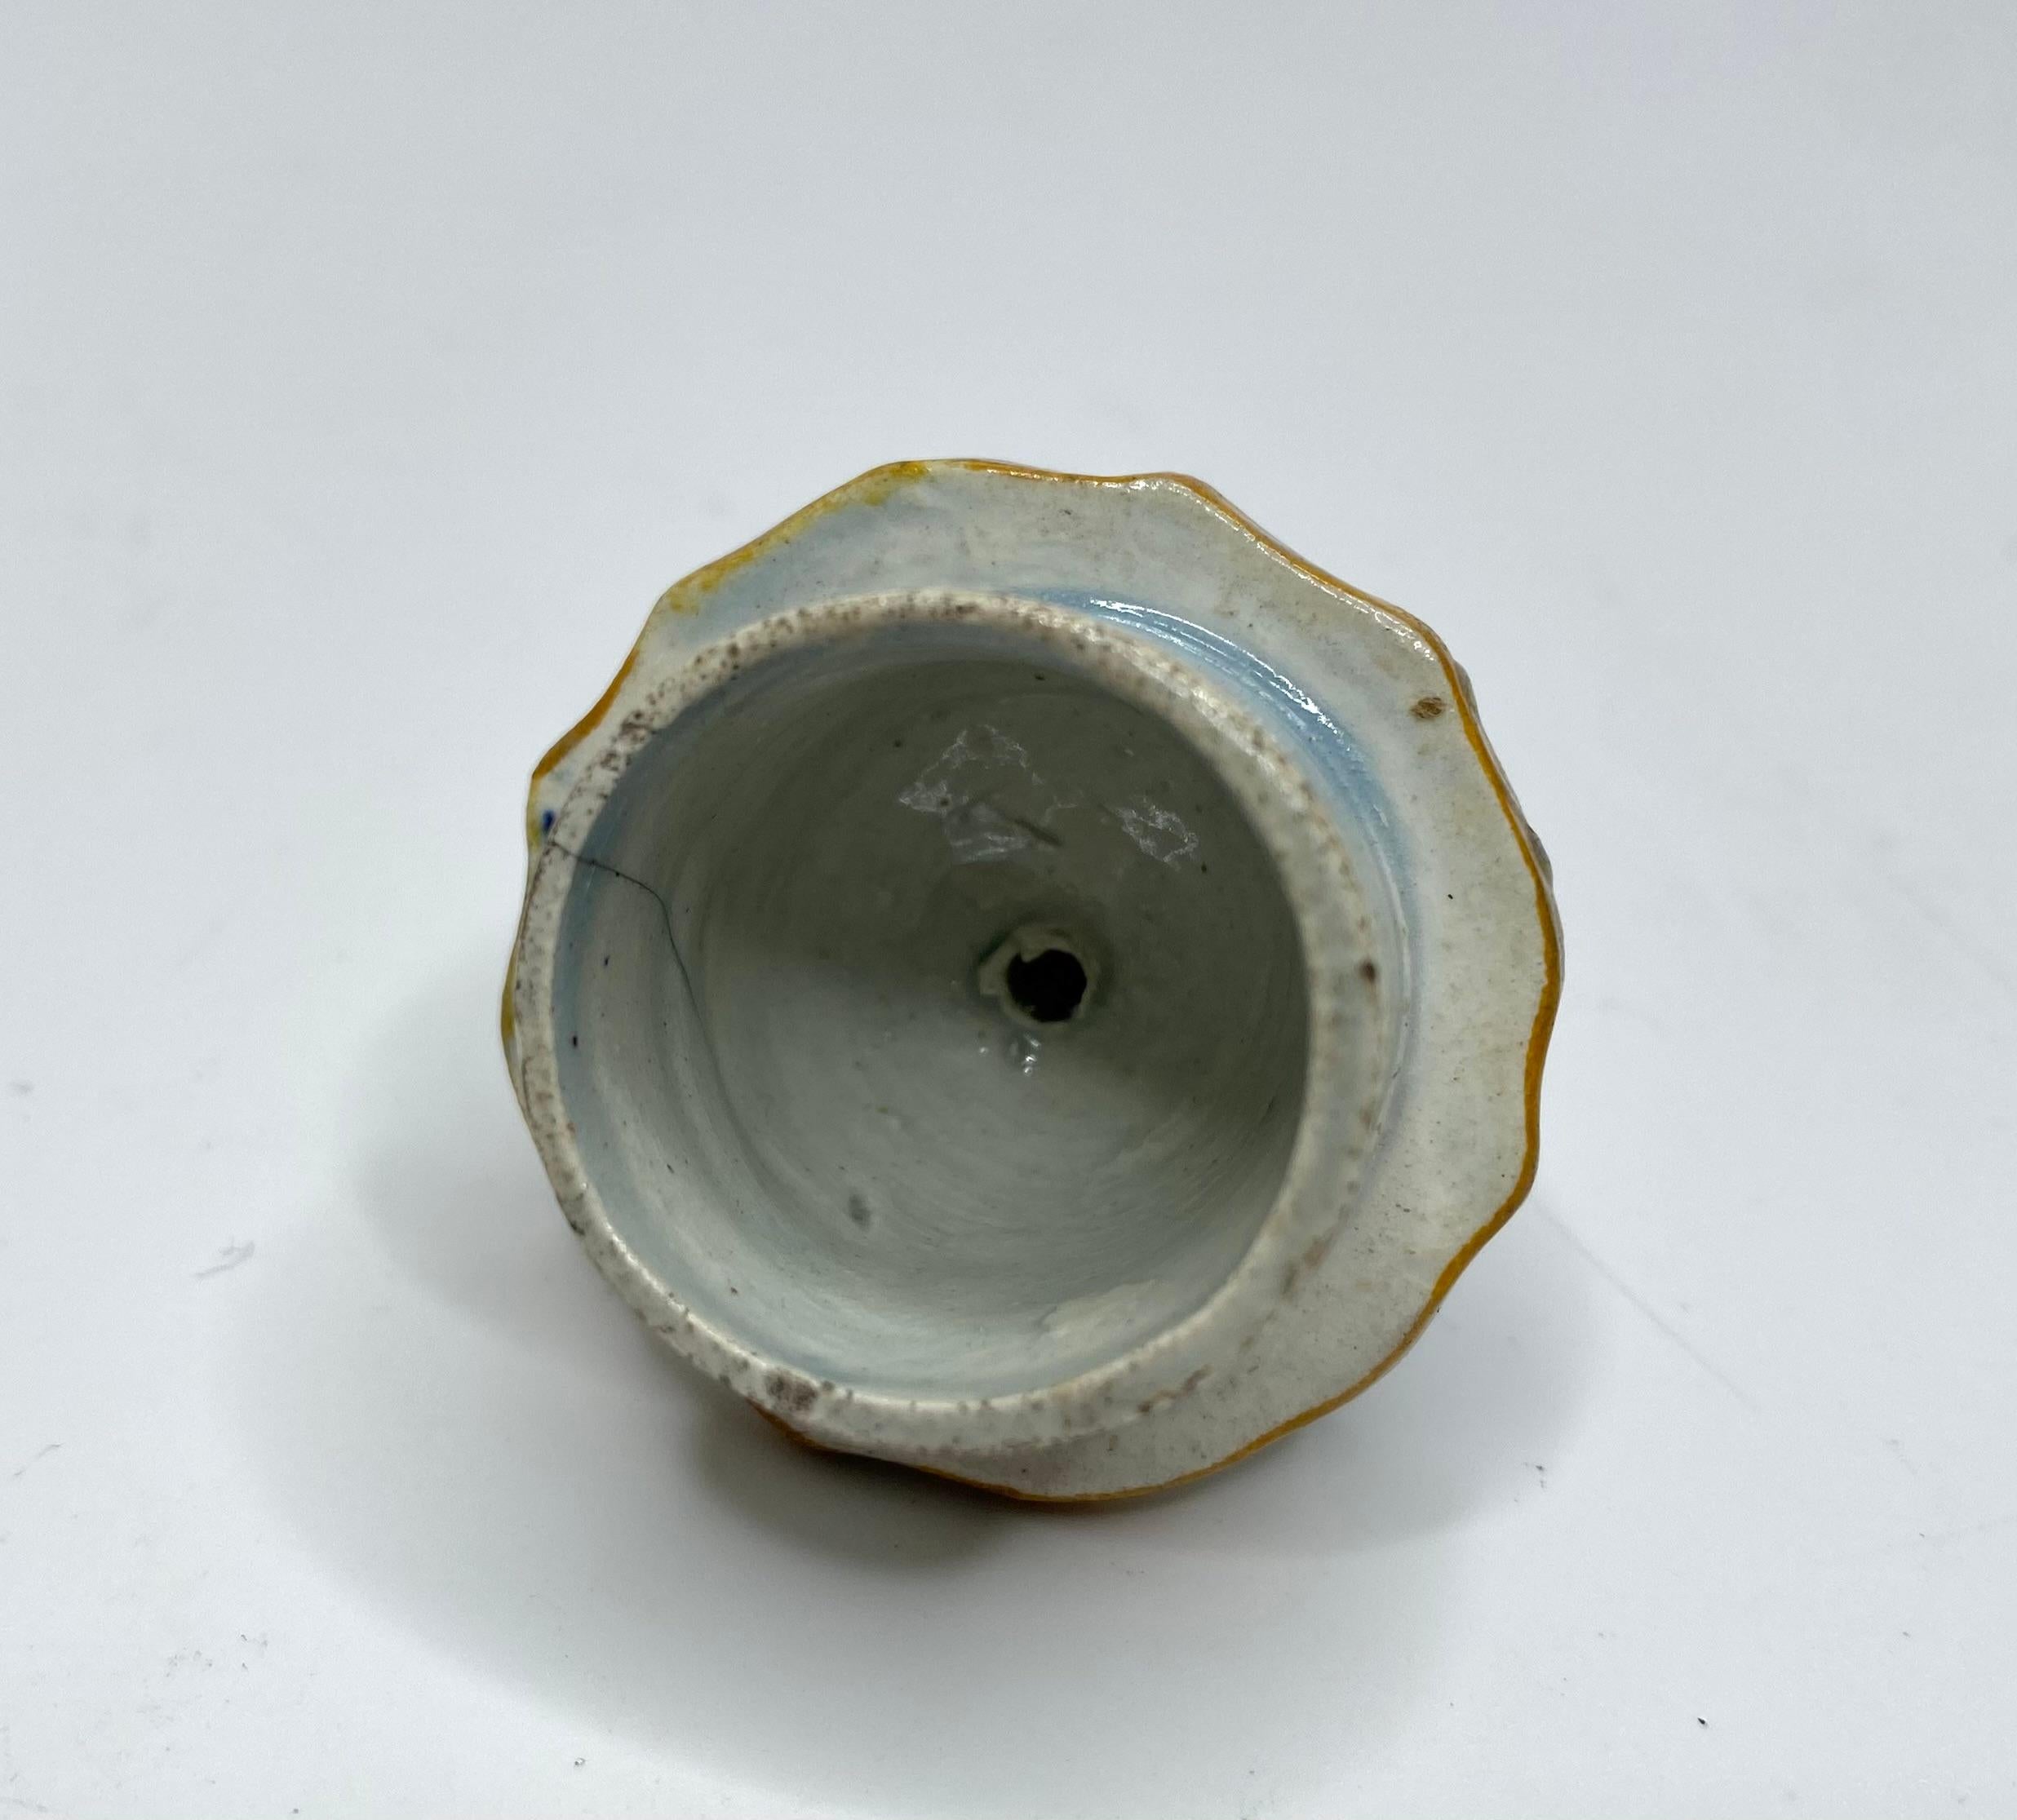 Prattware pottery ‘Macaroni’ tea caddy and cover, c. 1800. 5